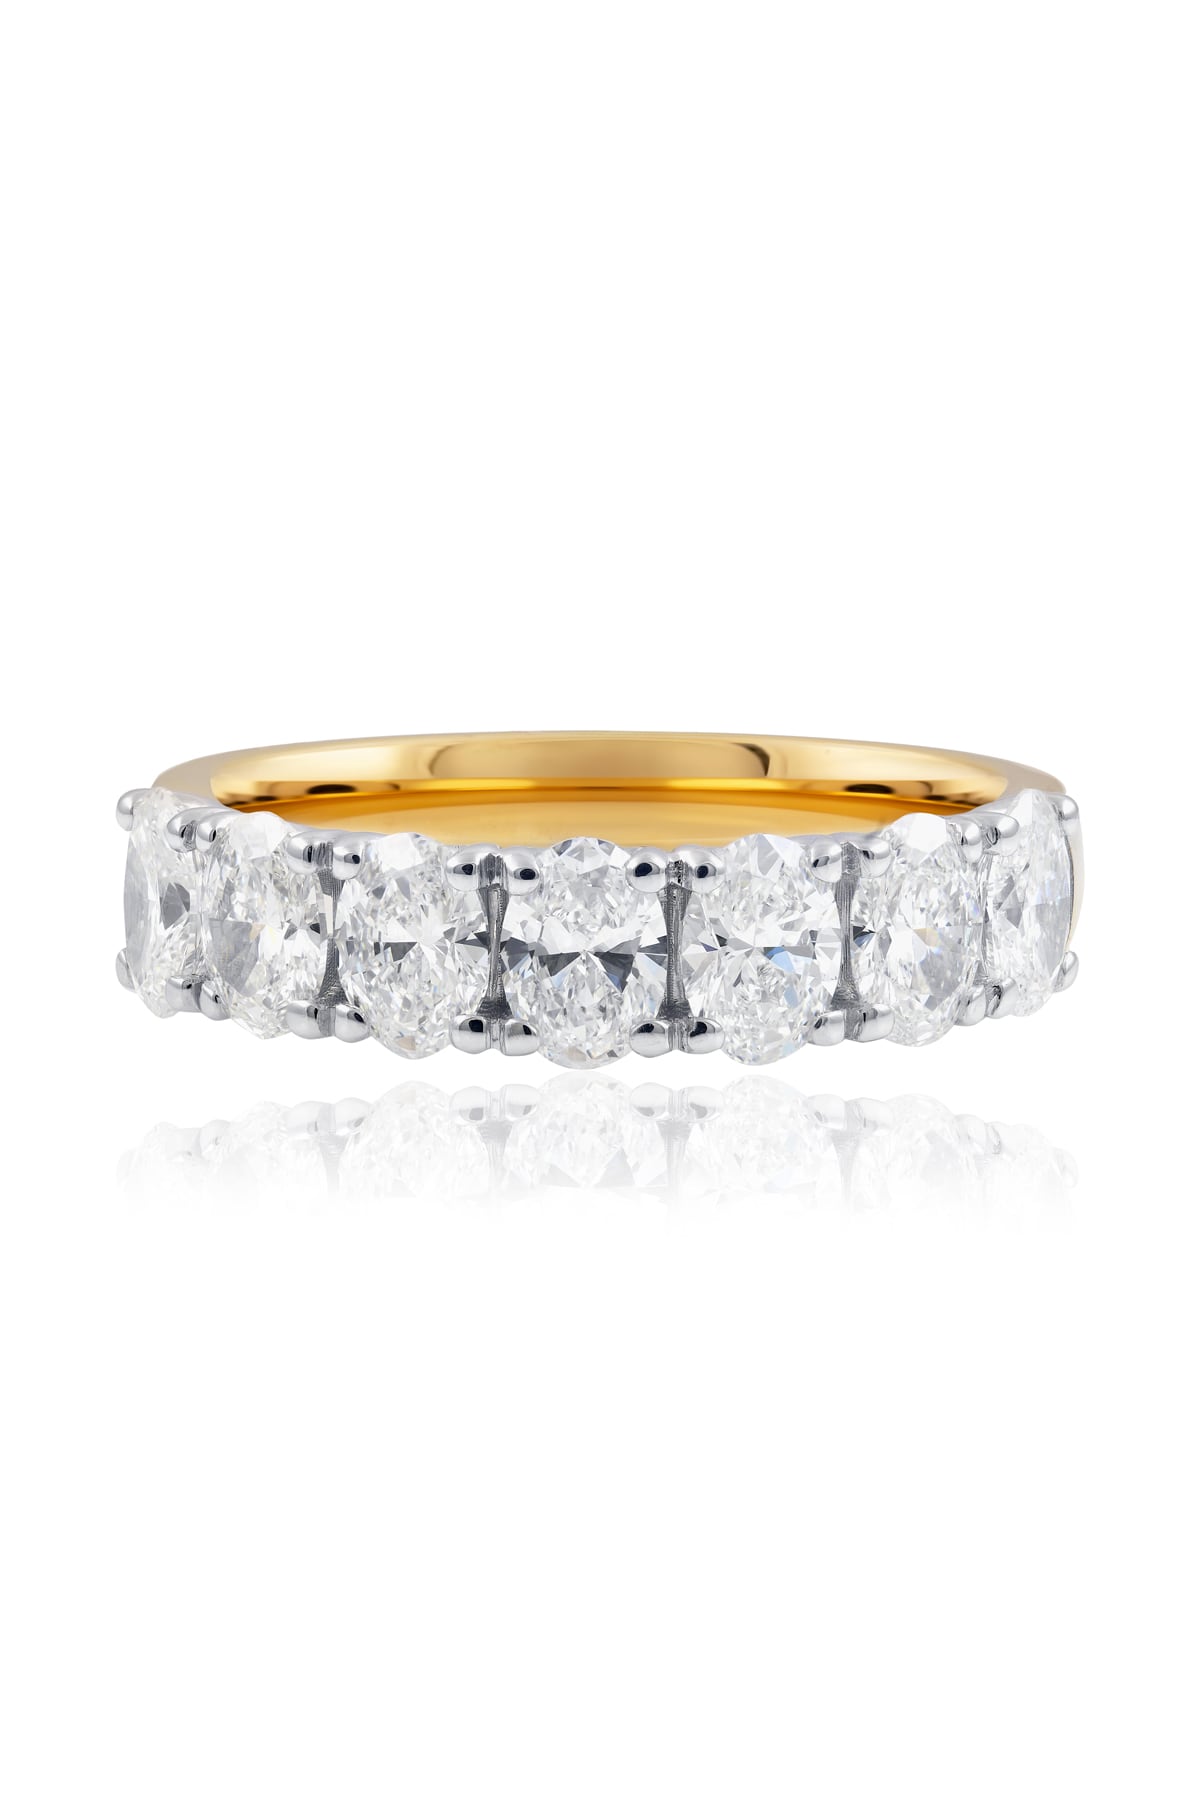 2.14 Carat Oval Cut Diamond Dress Ring from LeGassick Jewellery.